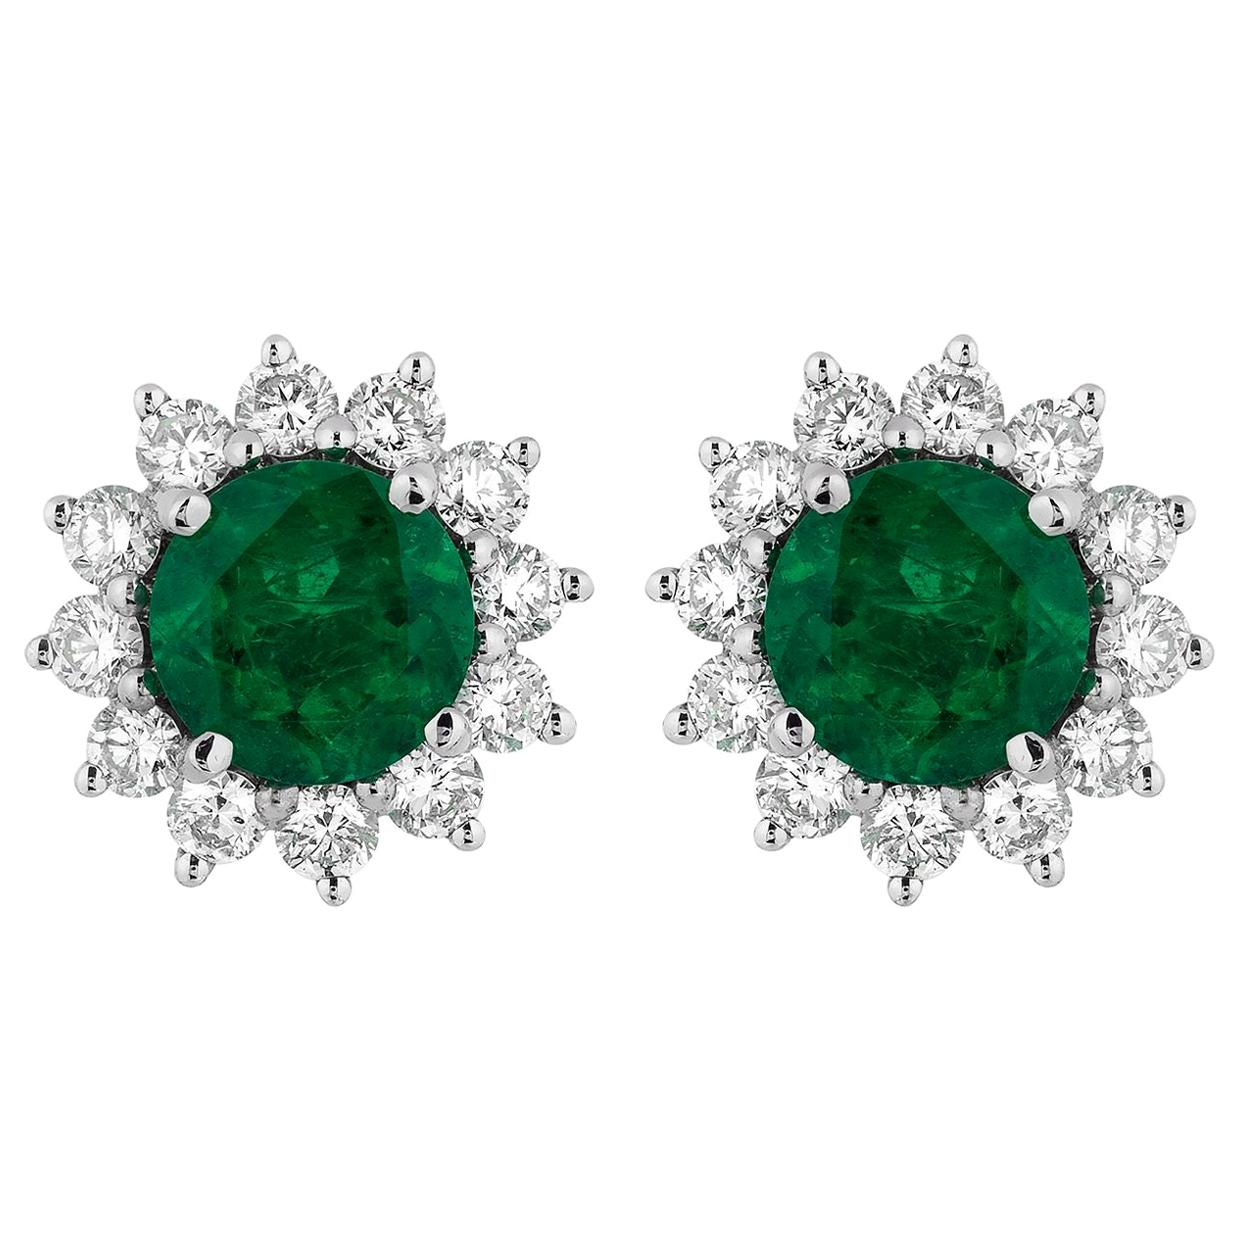 1.29 Carat Zambian Emerald Diamond Earrings